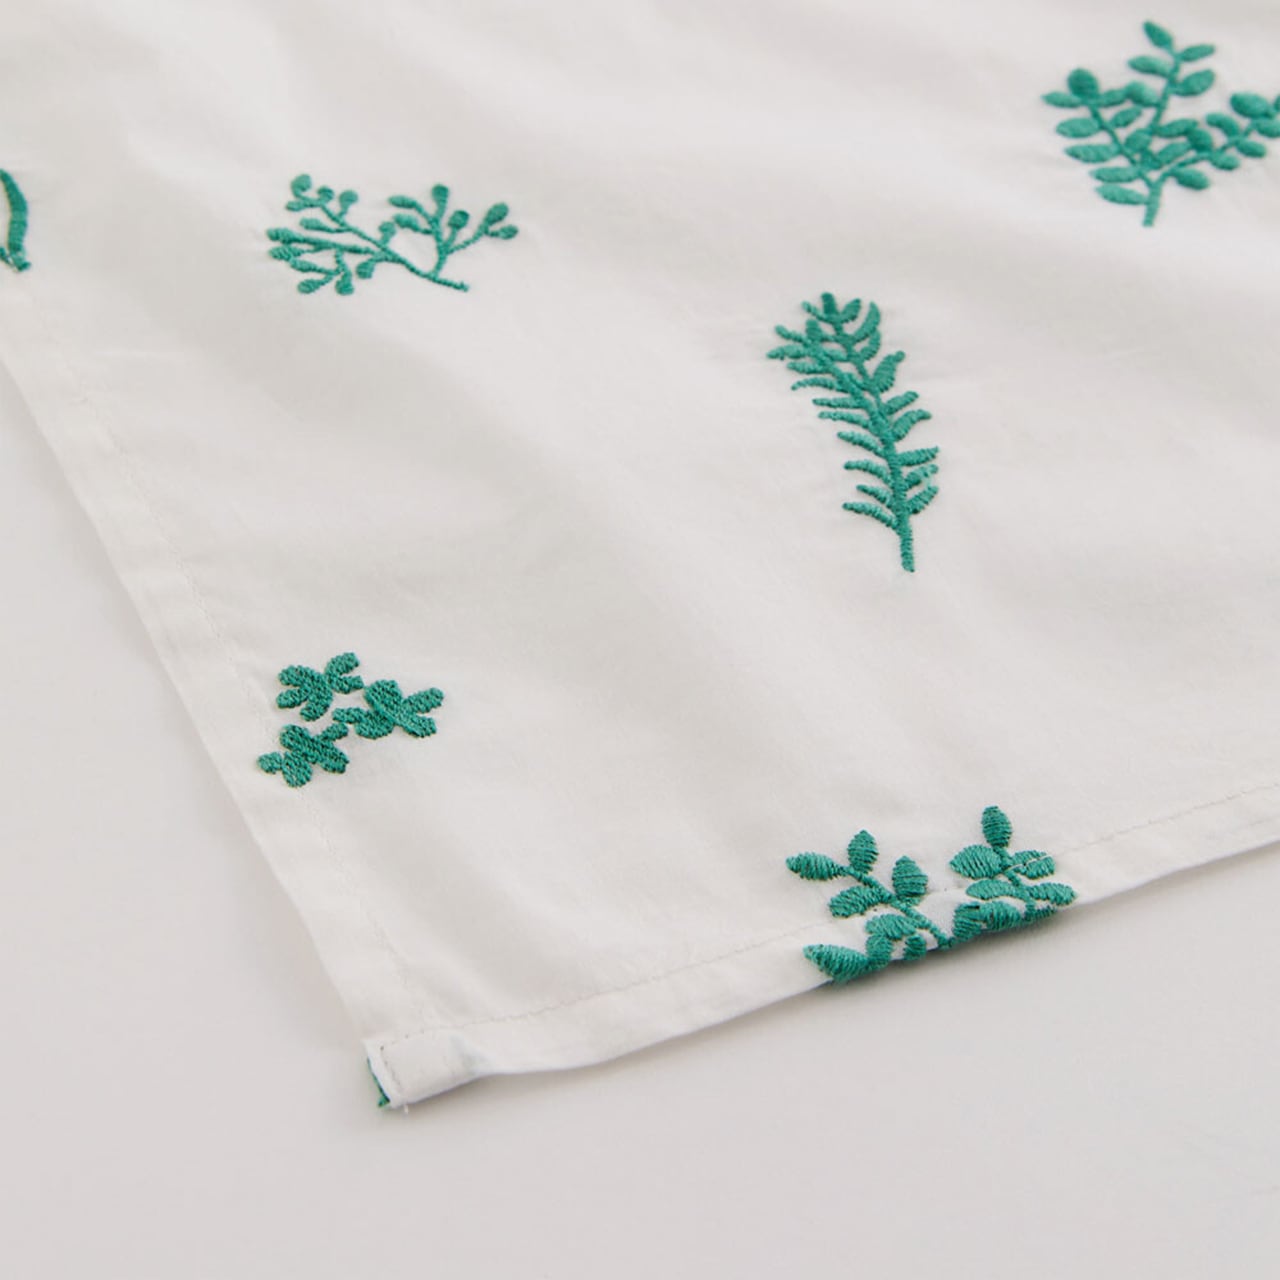 Botanique embroidery cloth